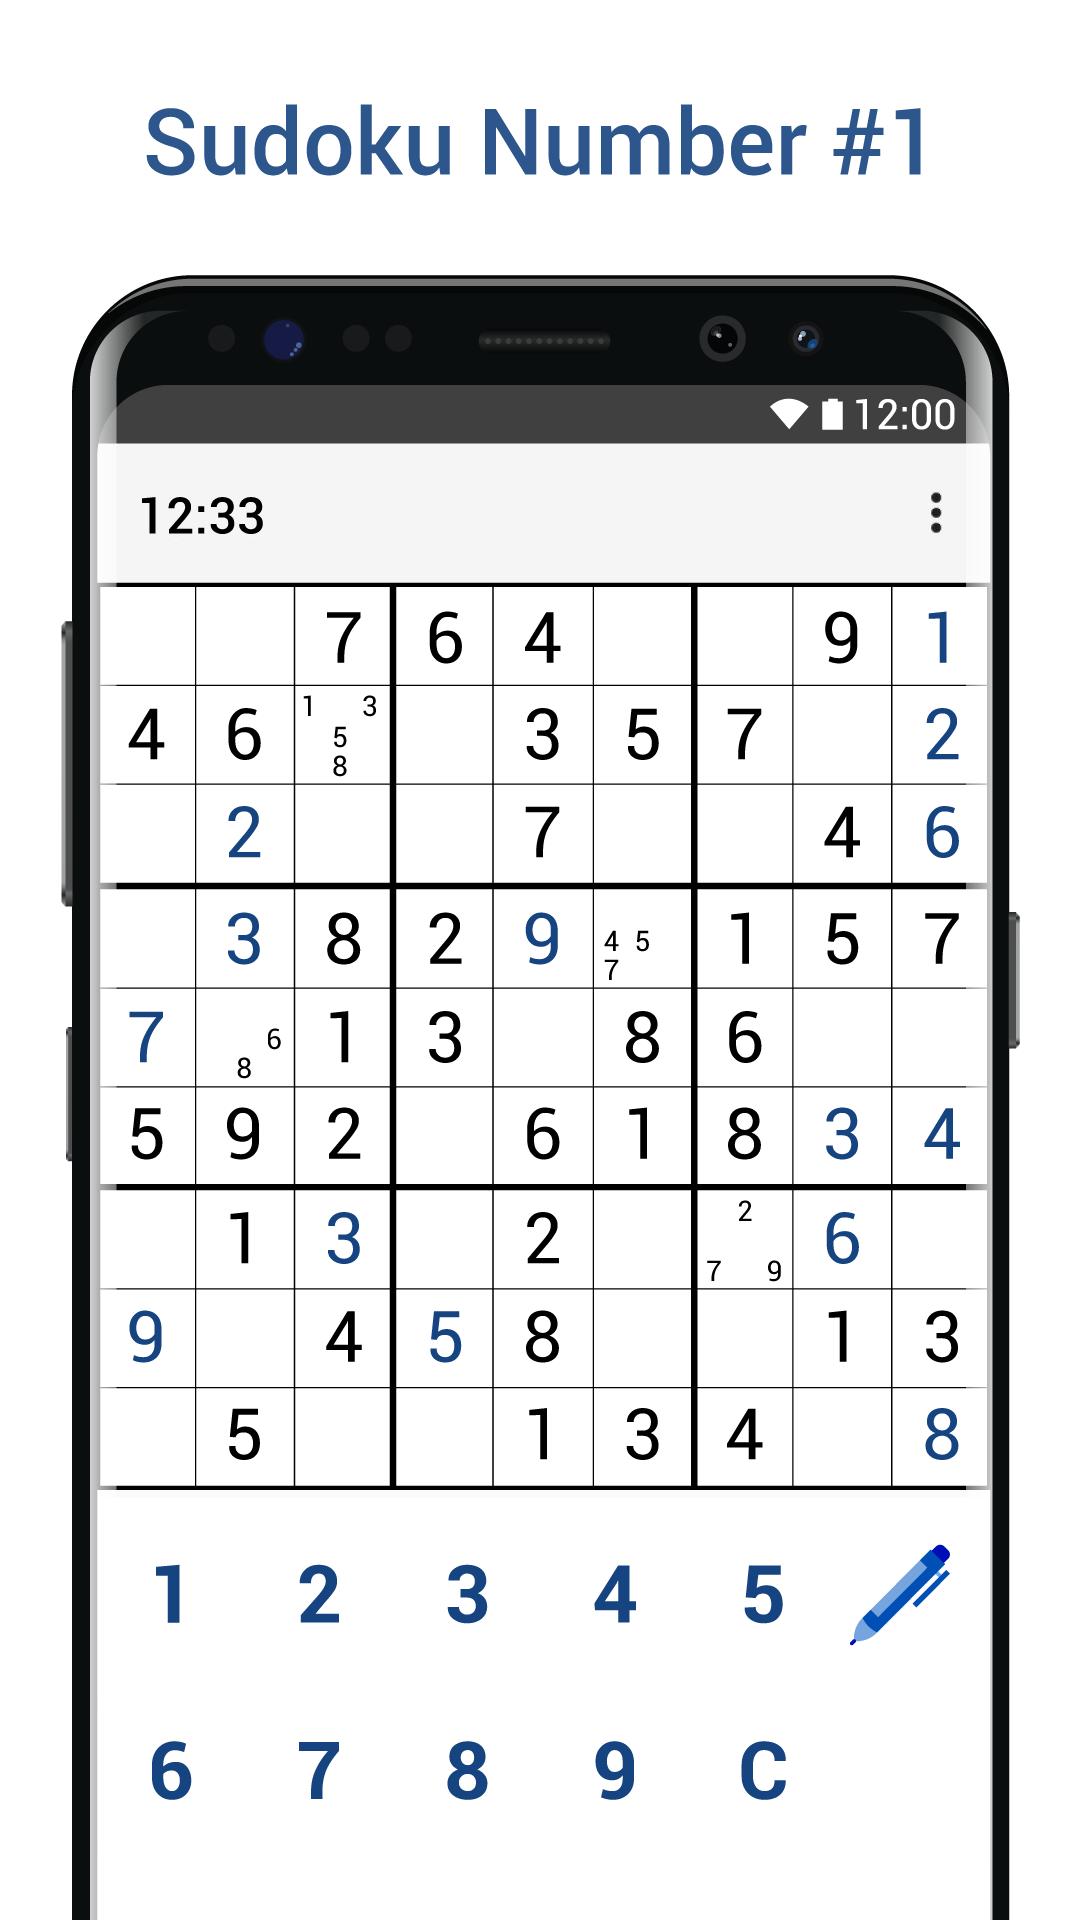 Juego de lógica Sudoku número #1 for Android - APK Download